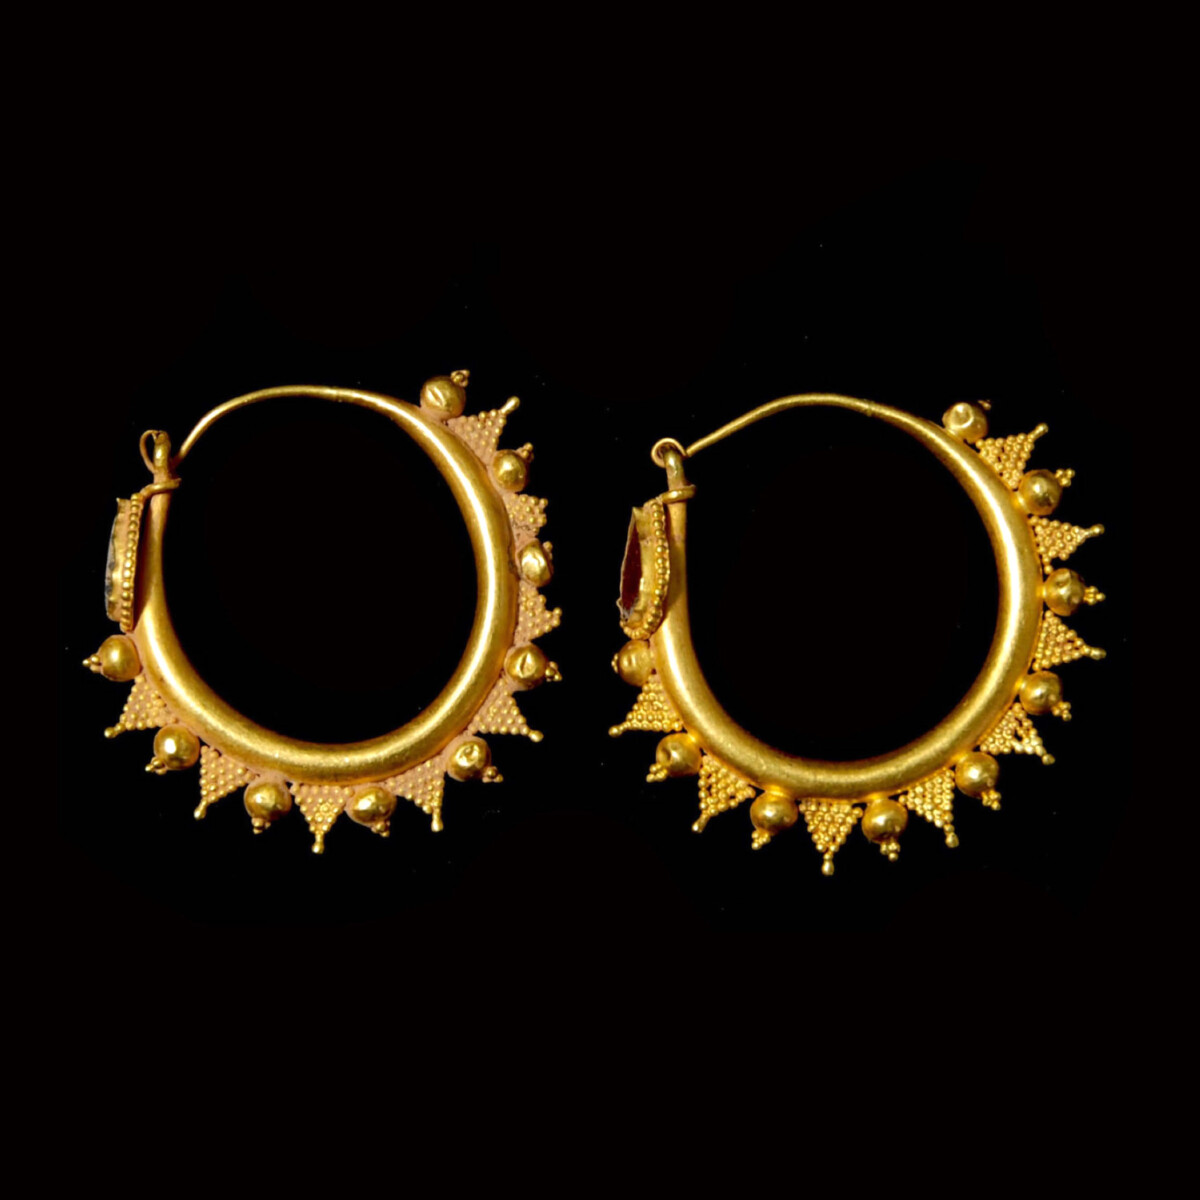 Greek gold hoop earrings with garnet side